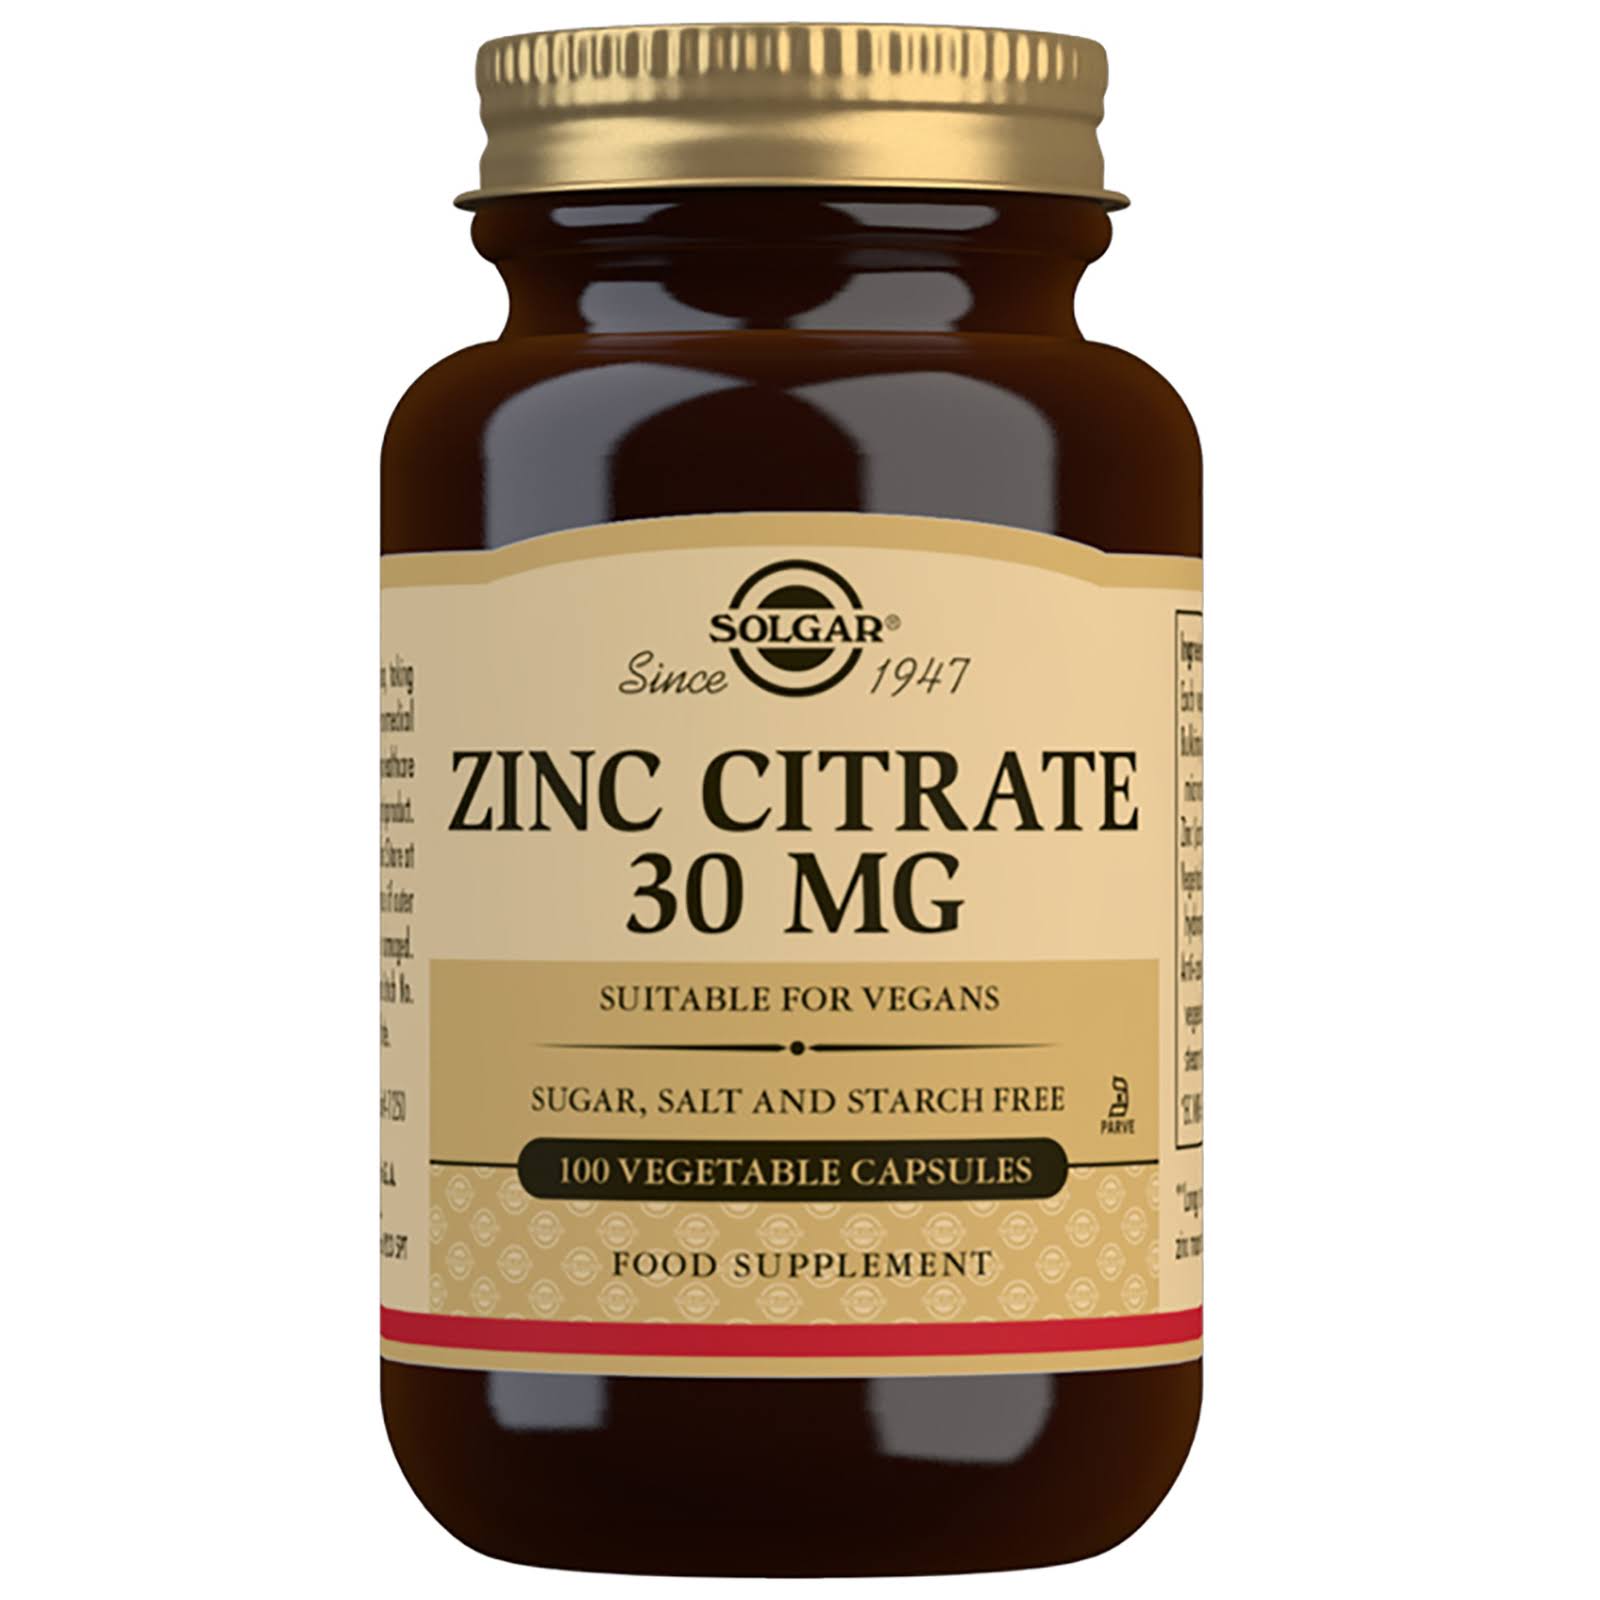 Solgar Zinc Citrate 30mg Skin & Immune System Support - 100 Capsules